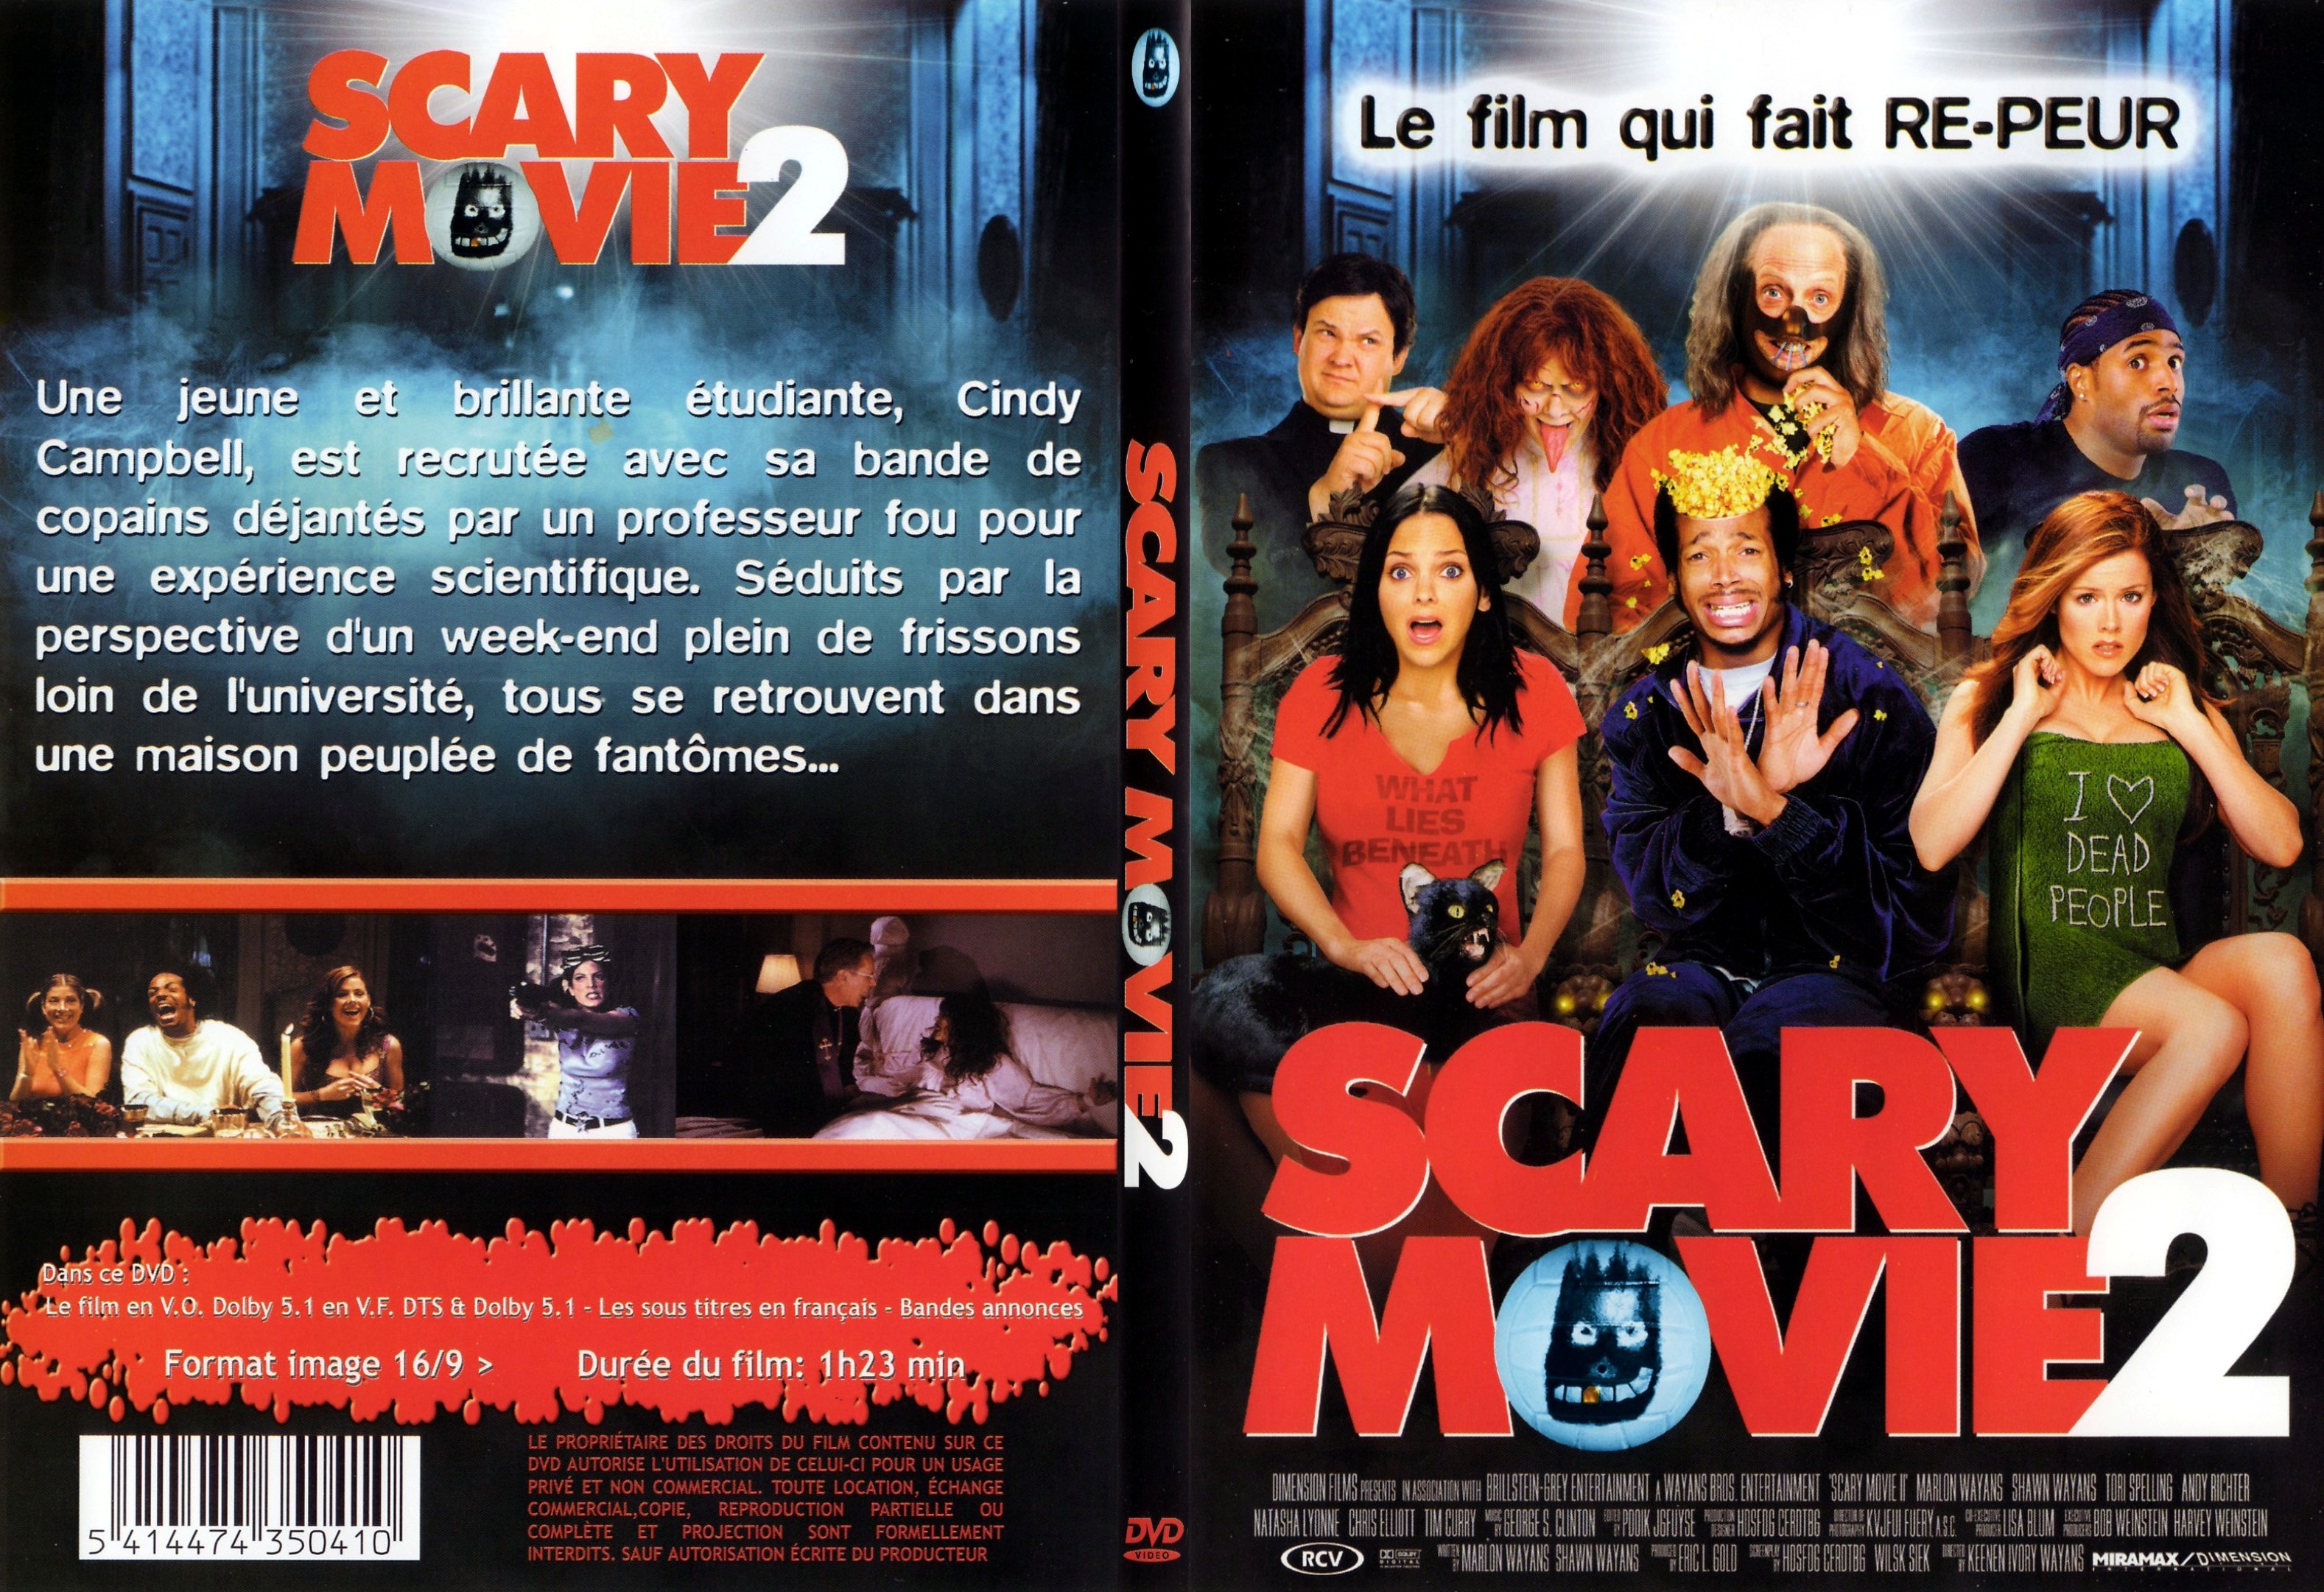 Jaquette DVD Scary movie 2 - SLIM v2